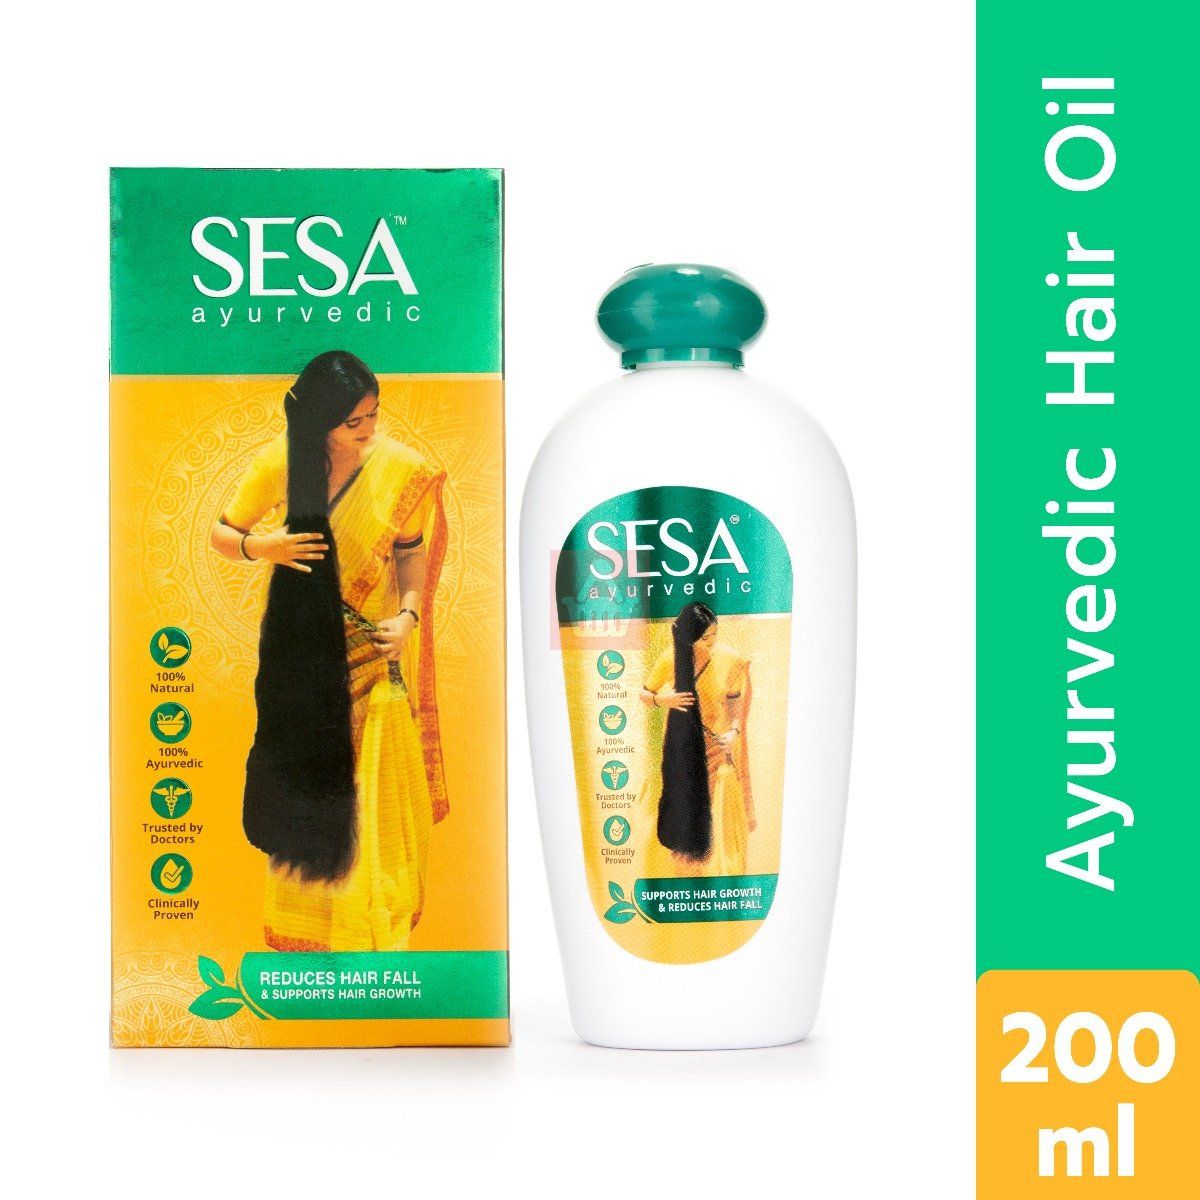 Sesa Ayurvedic Hair Oil Reduces Hair Fall - 200ml